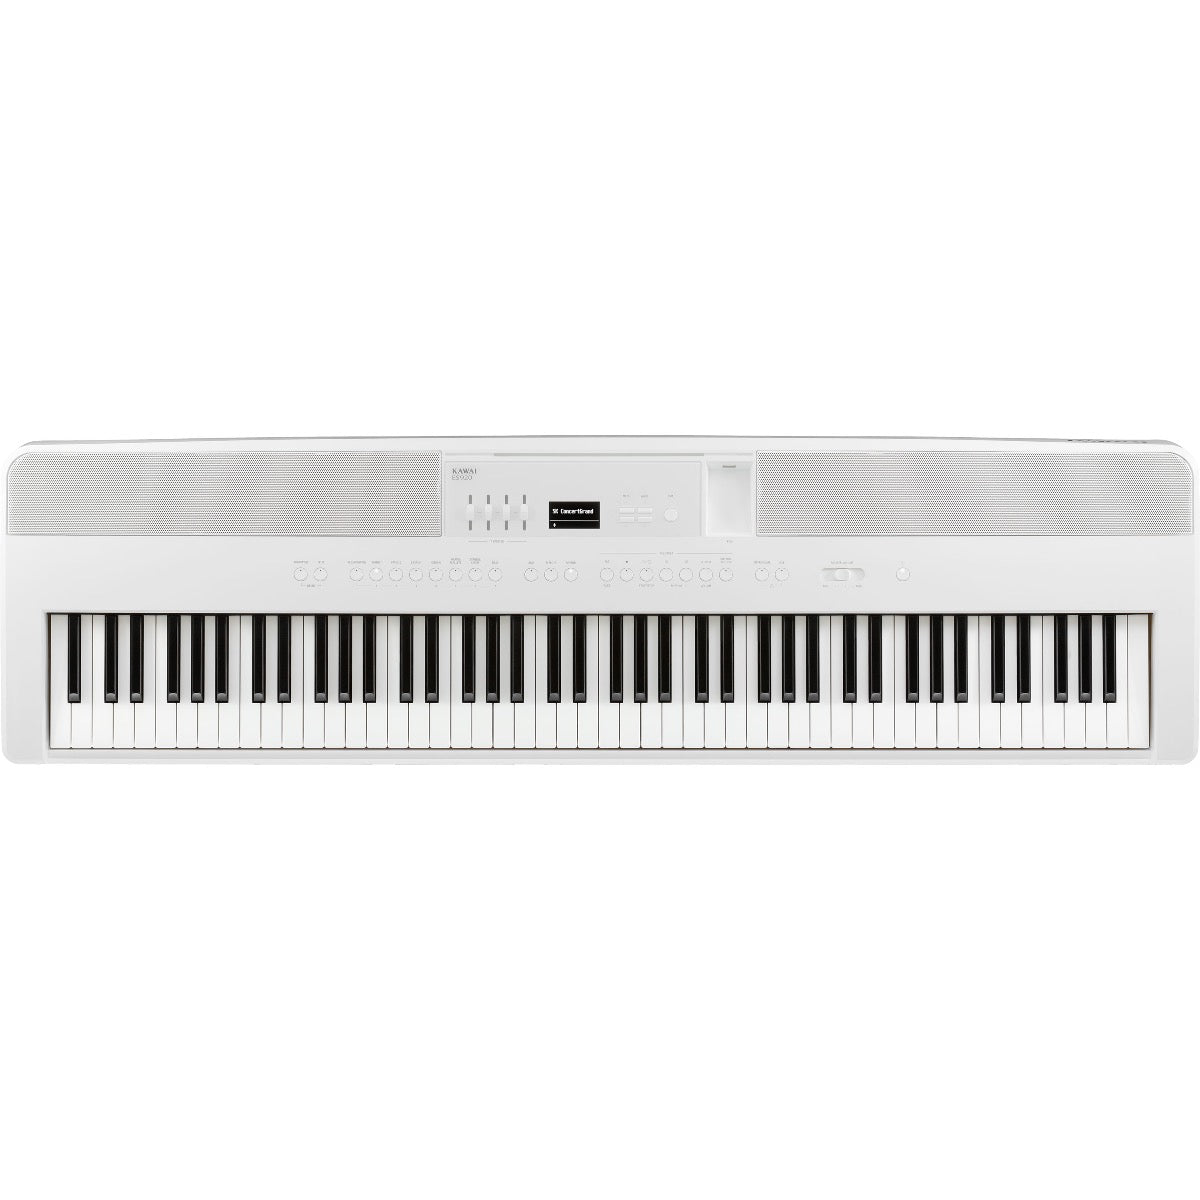 Top view of Kawai ES920 Portable Digital Piano - White